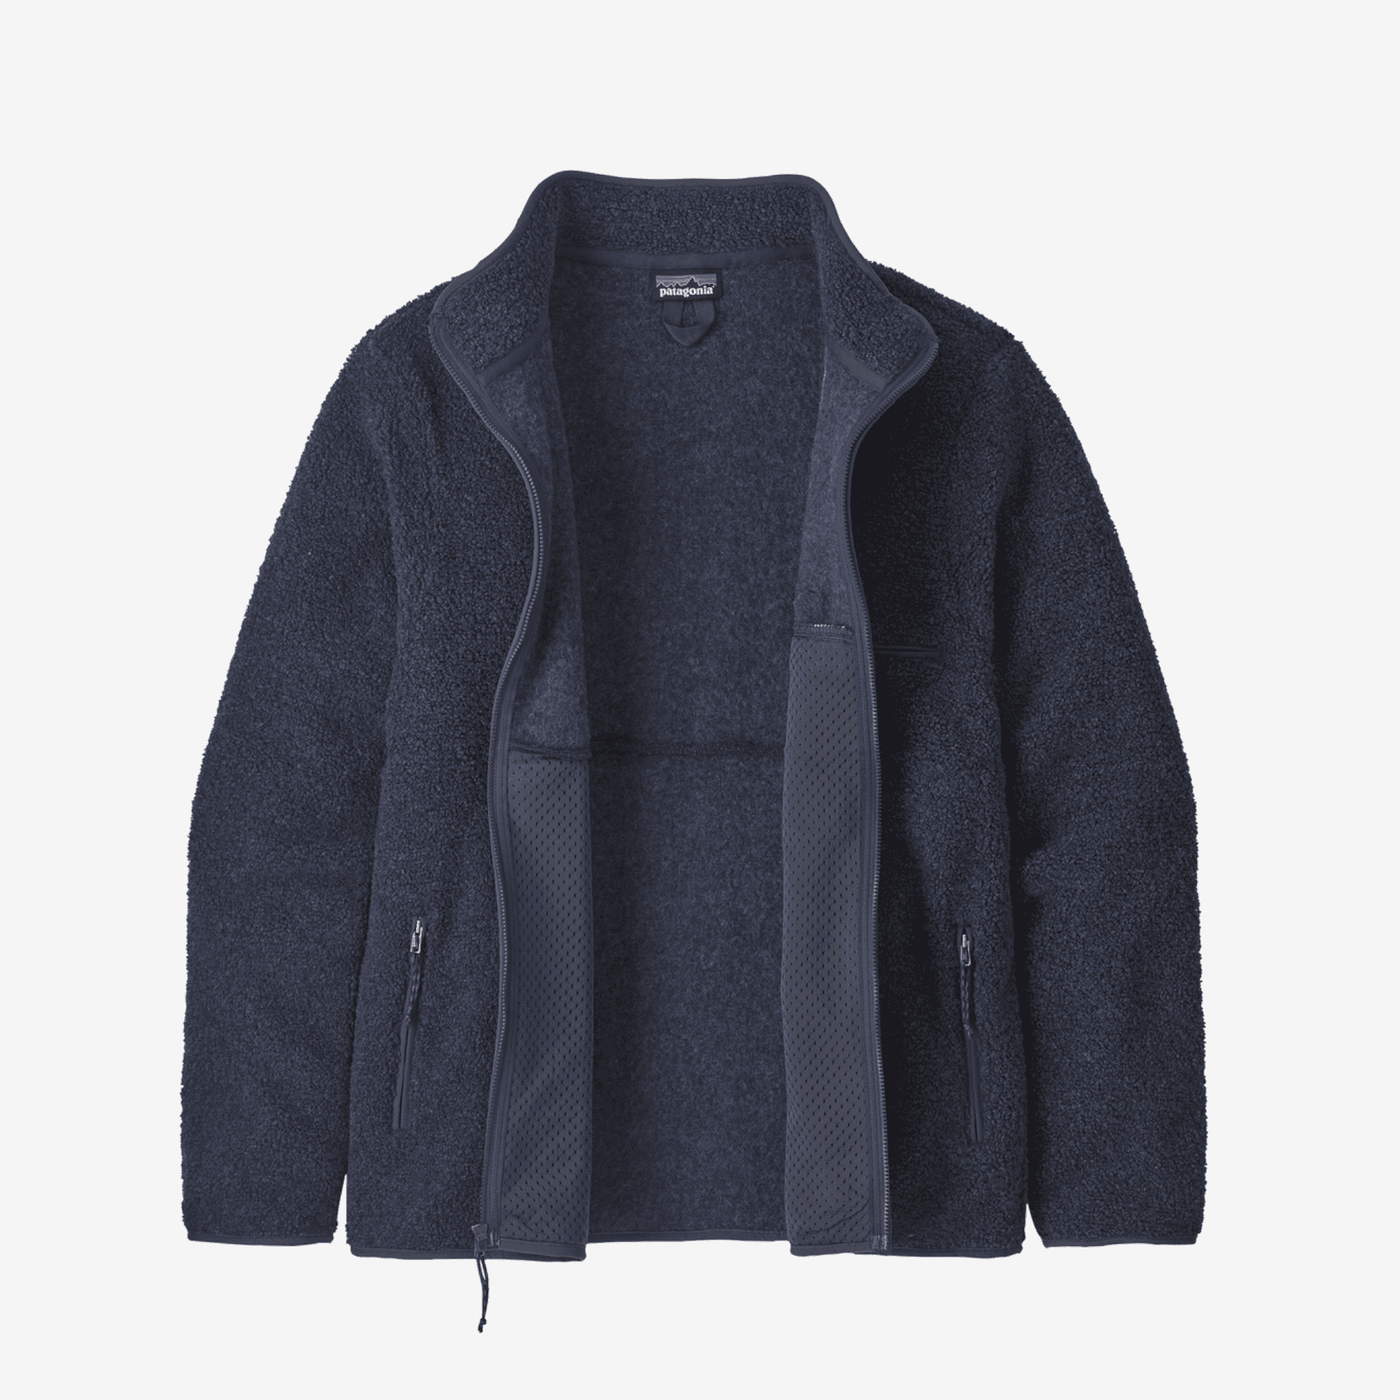 Polar Patagonia Hombre / Reclaimed Fleece Jacket Ultima Talla S